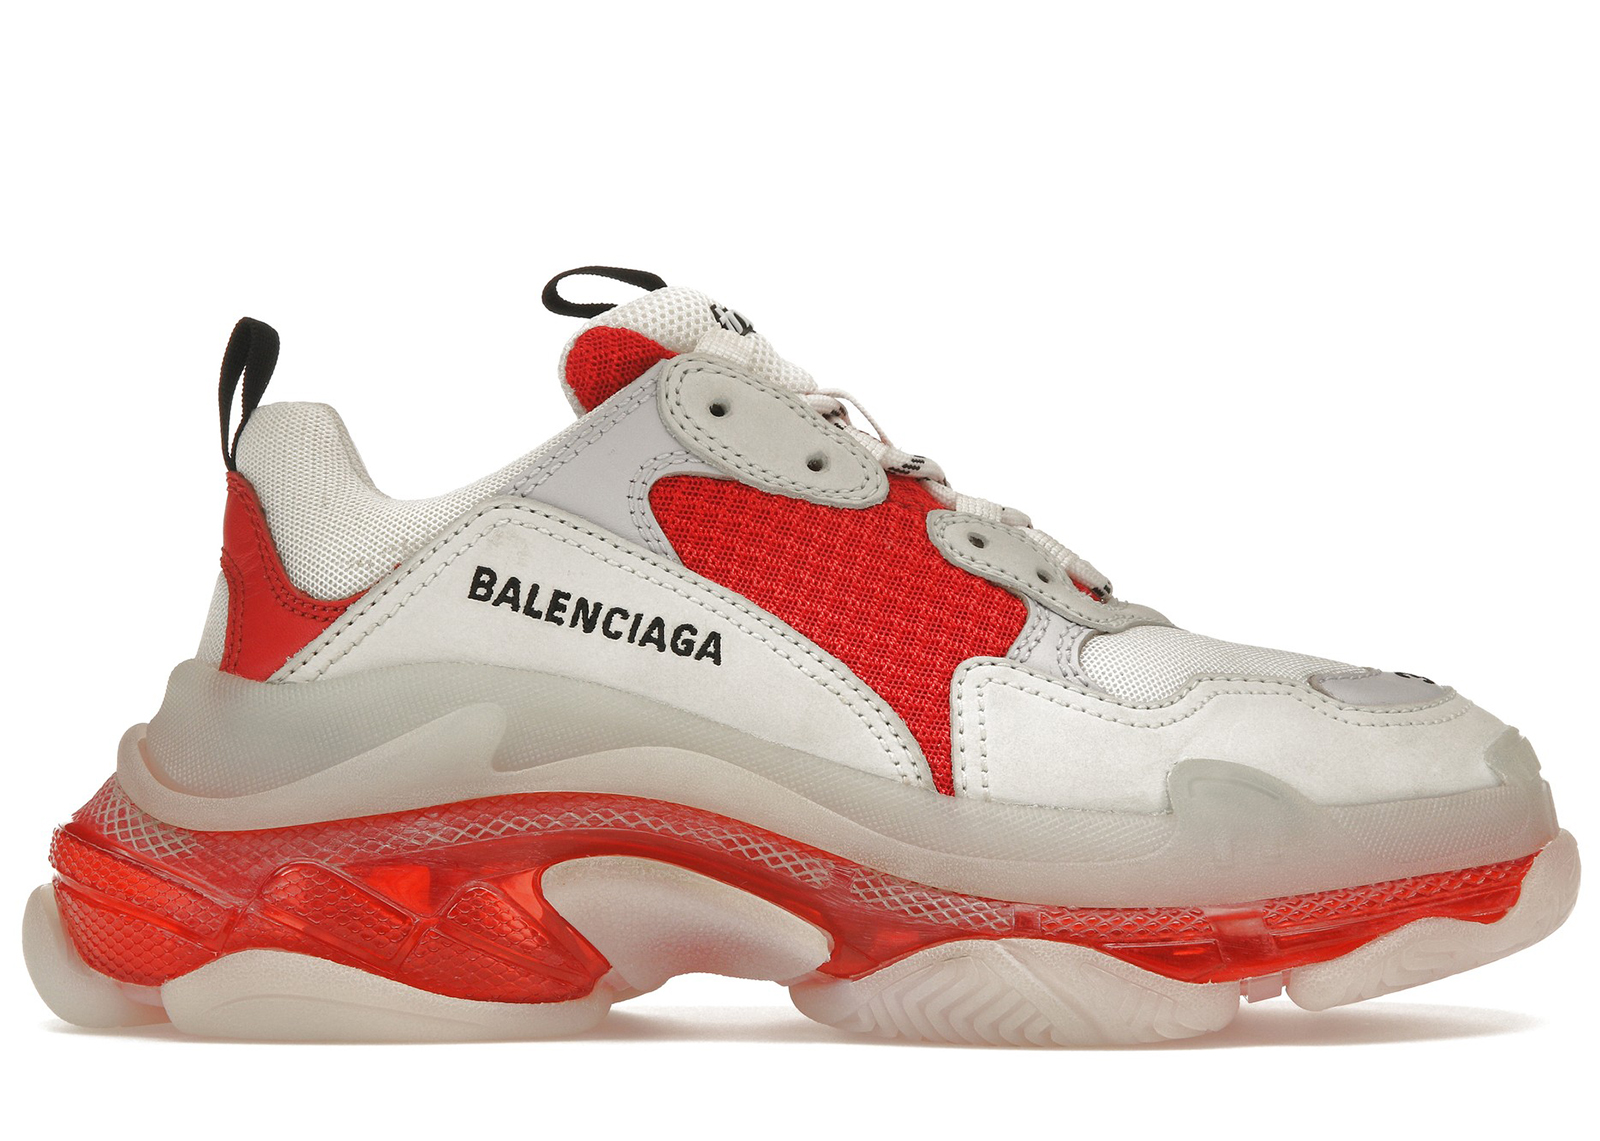 Boutique BALENCIAGA ARENA Red leather sneakers Retail price 645 Size 44